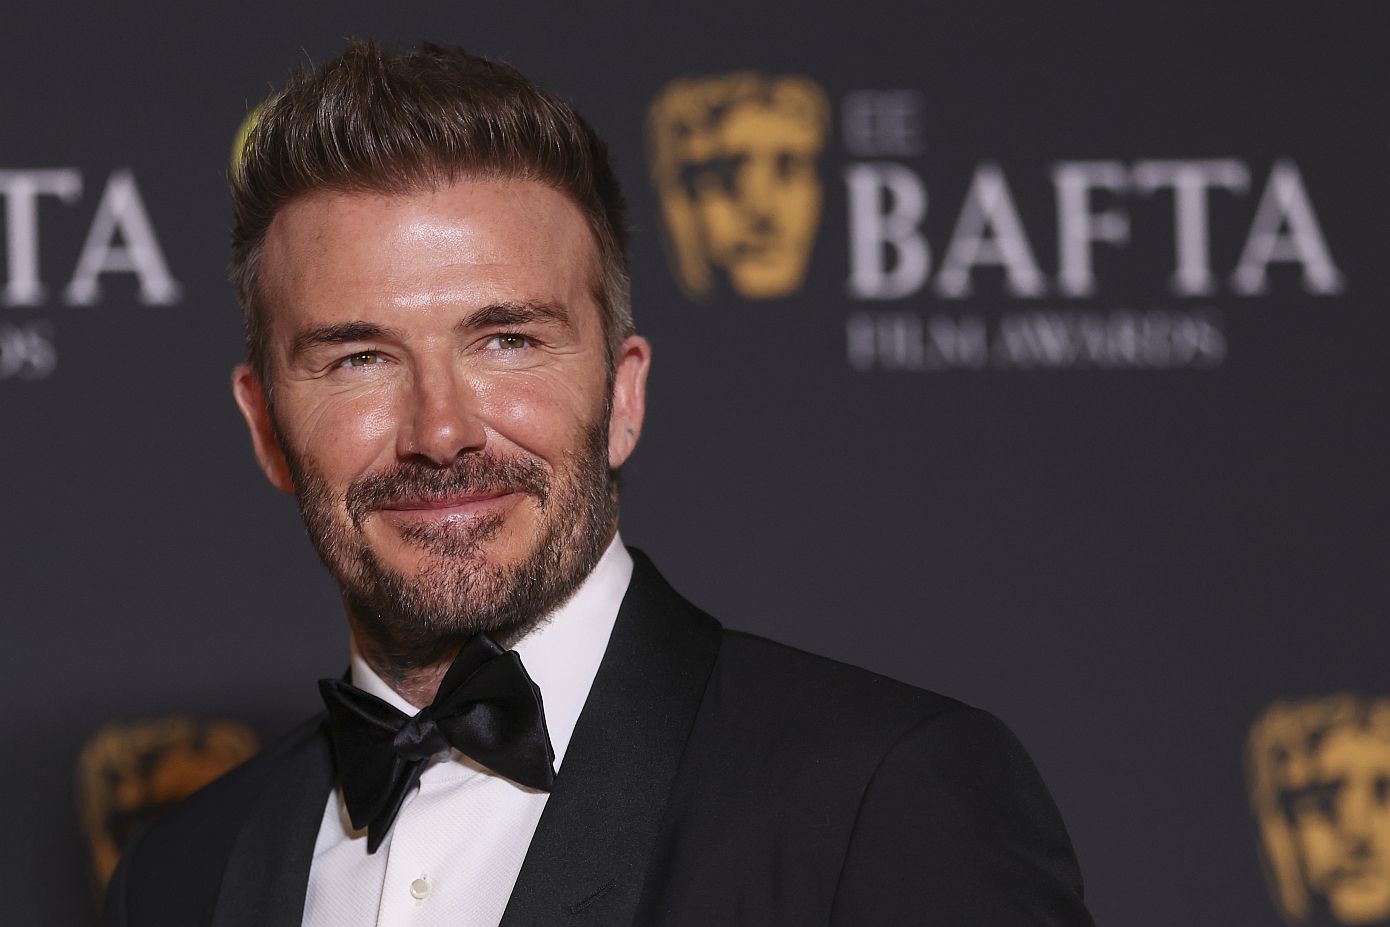 O David Beckham αναλαμβάνει καλλιτεχνικός διευθυντής στην ανδρική σειρά μεγάλου οίκου μόδας